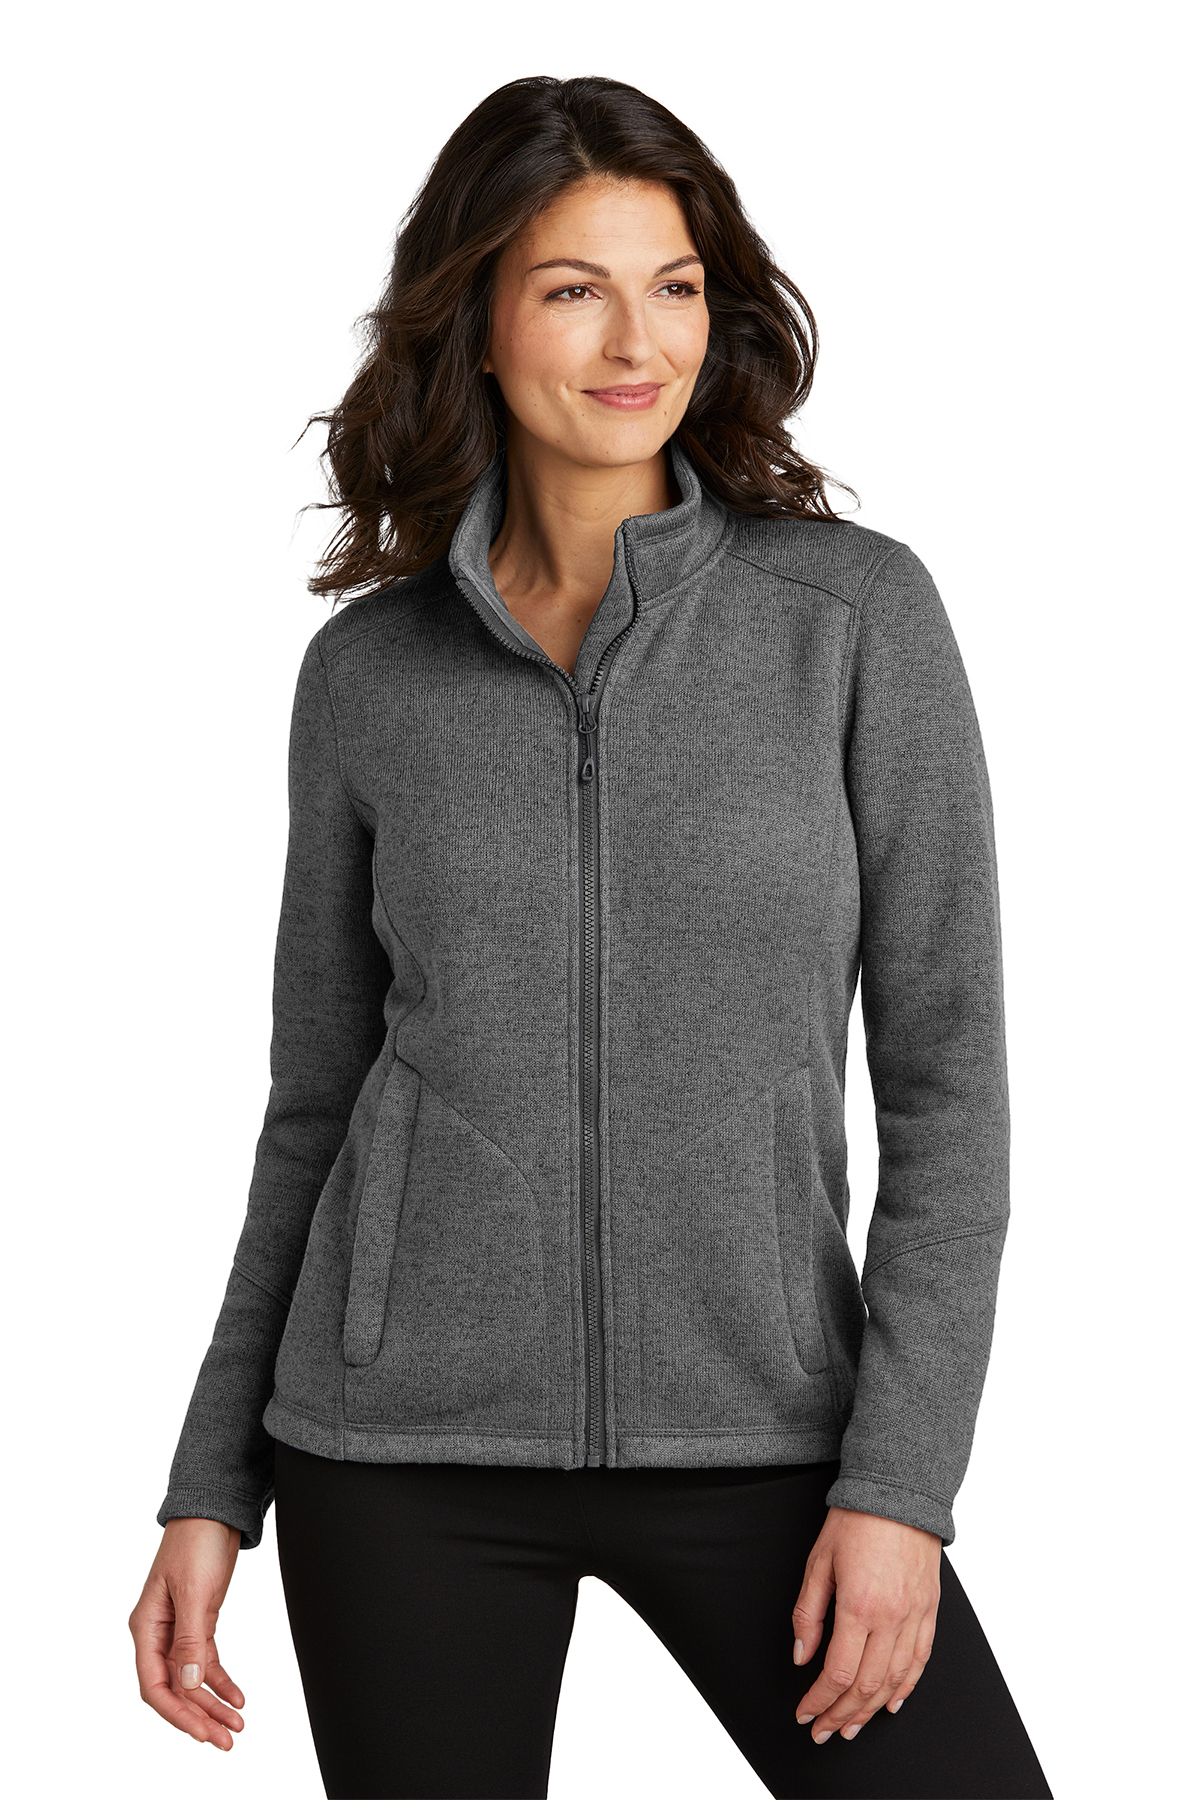 Port Authority Ladies Arc Sweater Fleece Jacket, Product